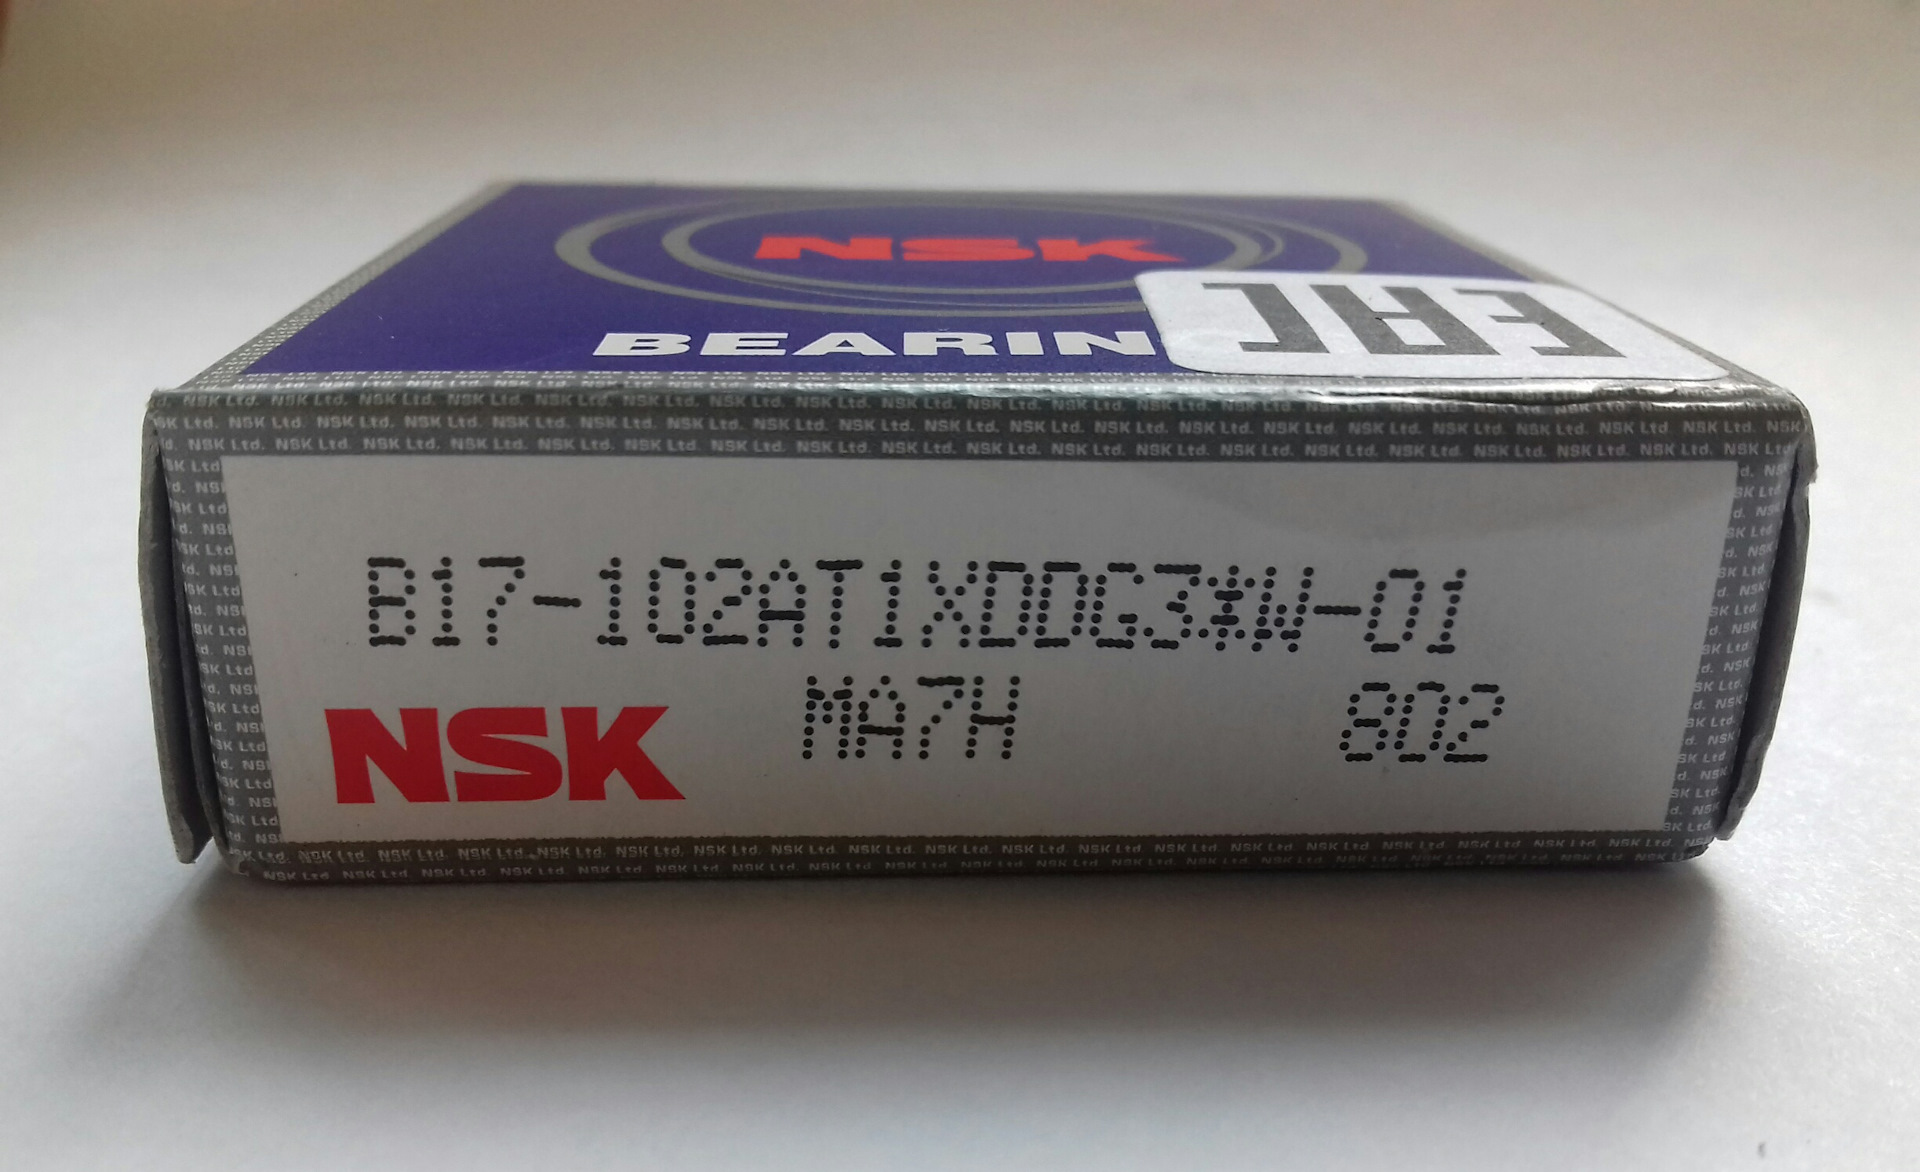 Nsk генератор. NSK b17102at1xddg3w01. B17102at1xddg3*w01 подшипник. NSK b17-102at1xddg3*w-01. NSK b17-102at1xddg3*w-01 подшипник генератора передний.